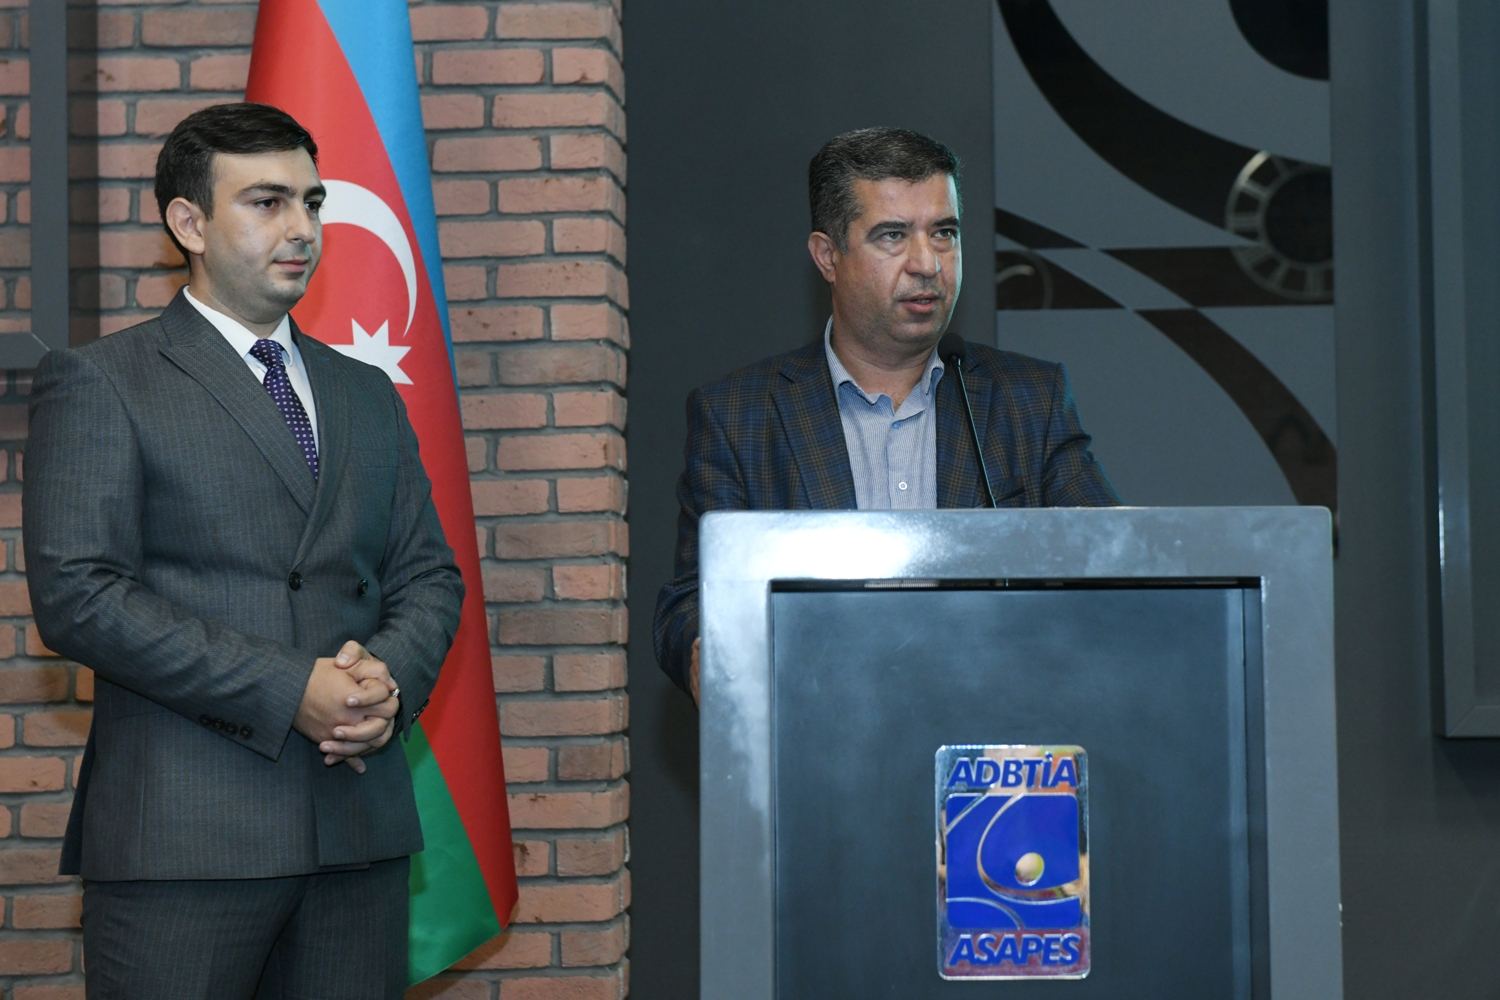 В Баку прошла церемония награждения "Foto Kadr" (ФОТО)